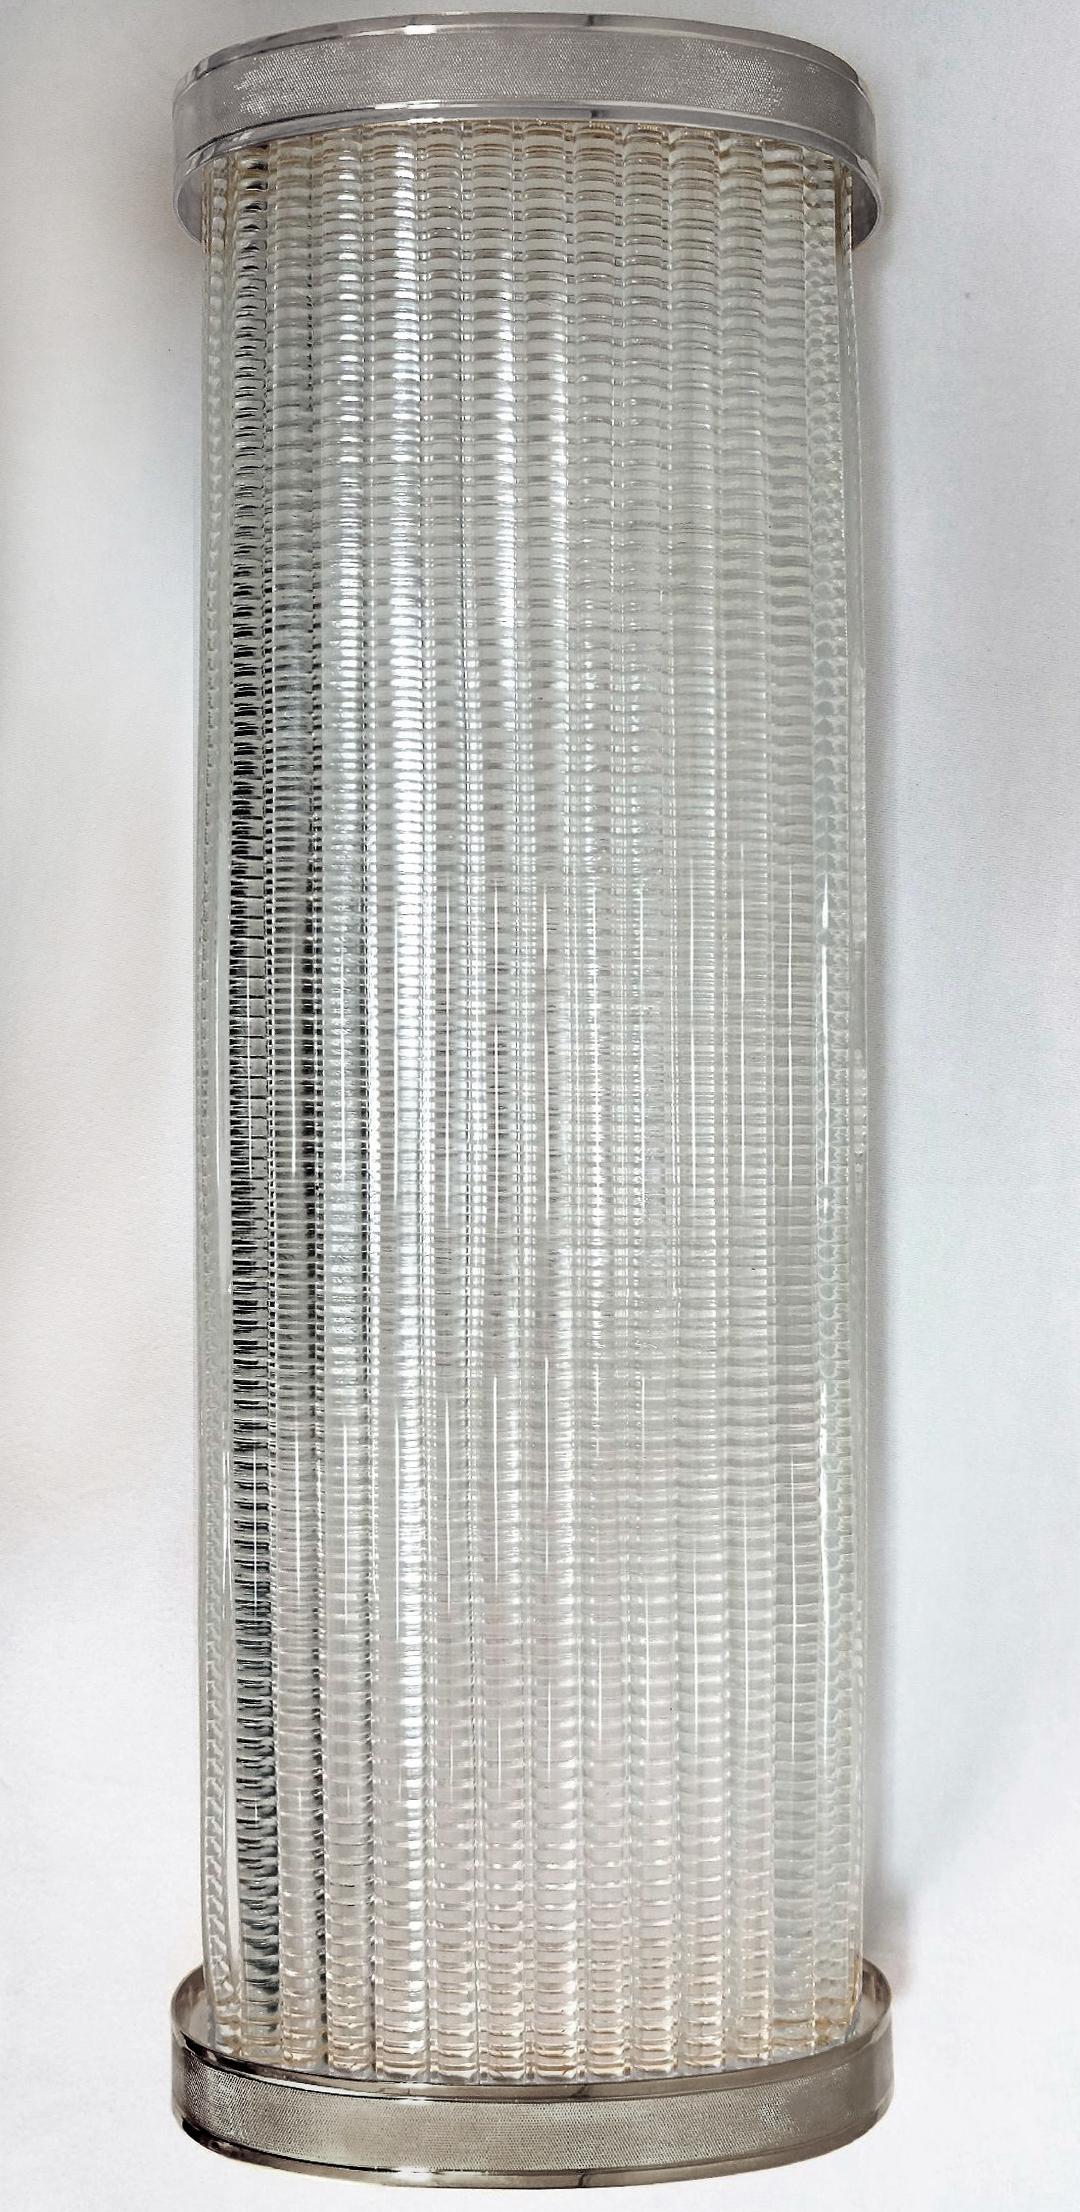 Verre de Murano Largeur Laudarte Srl, Italie  Paire d'appliques en verre de Murano finition nickelée en vente